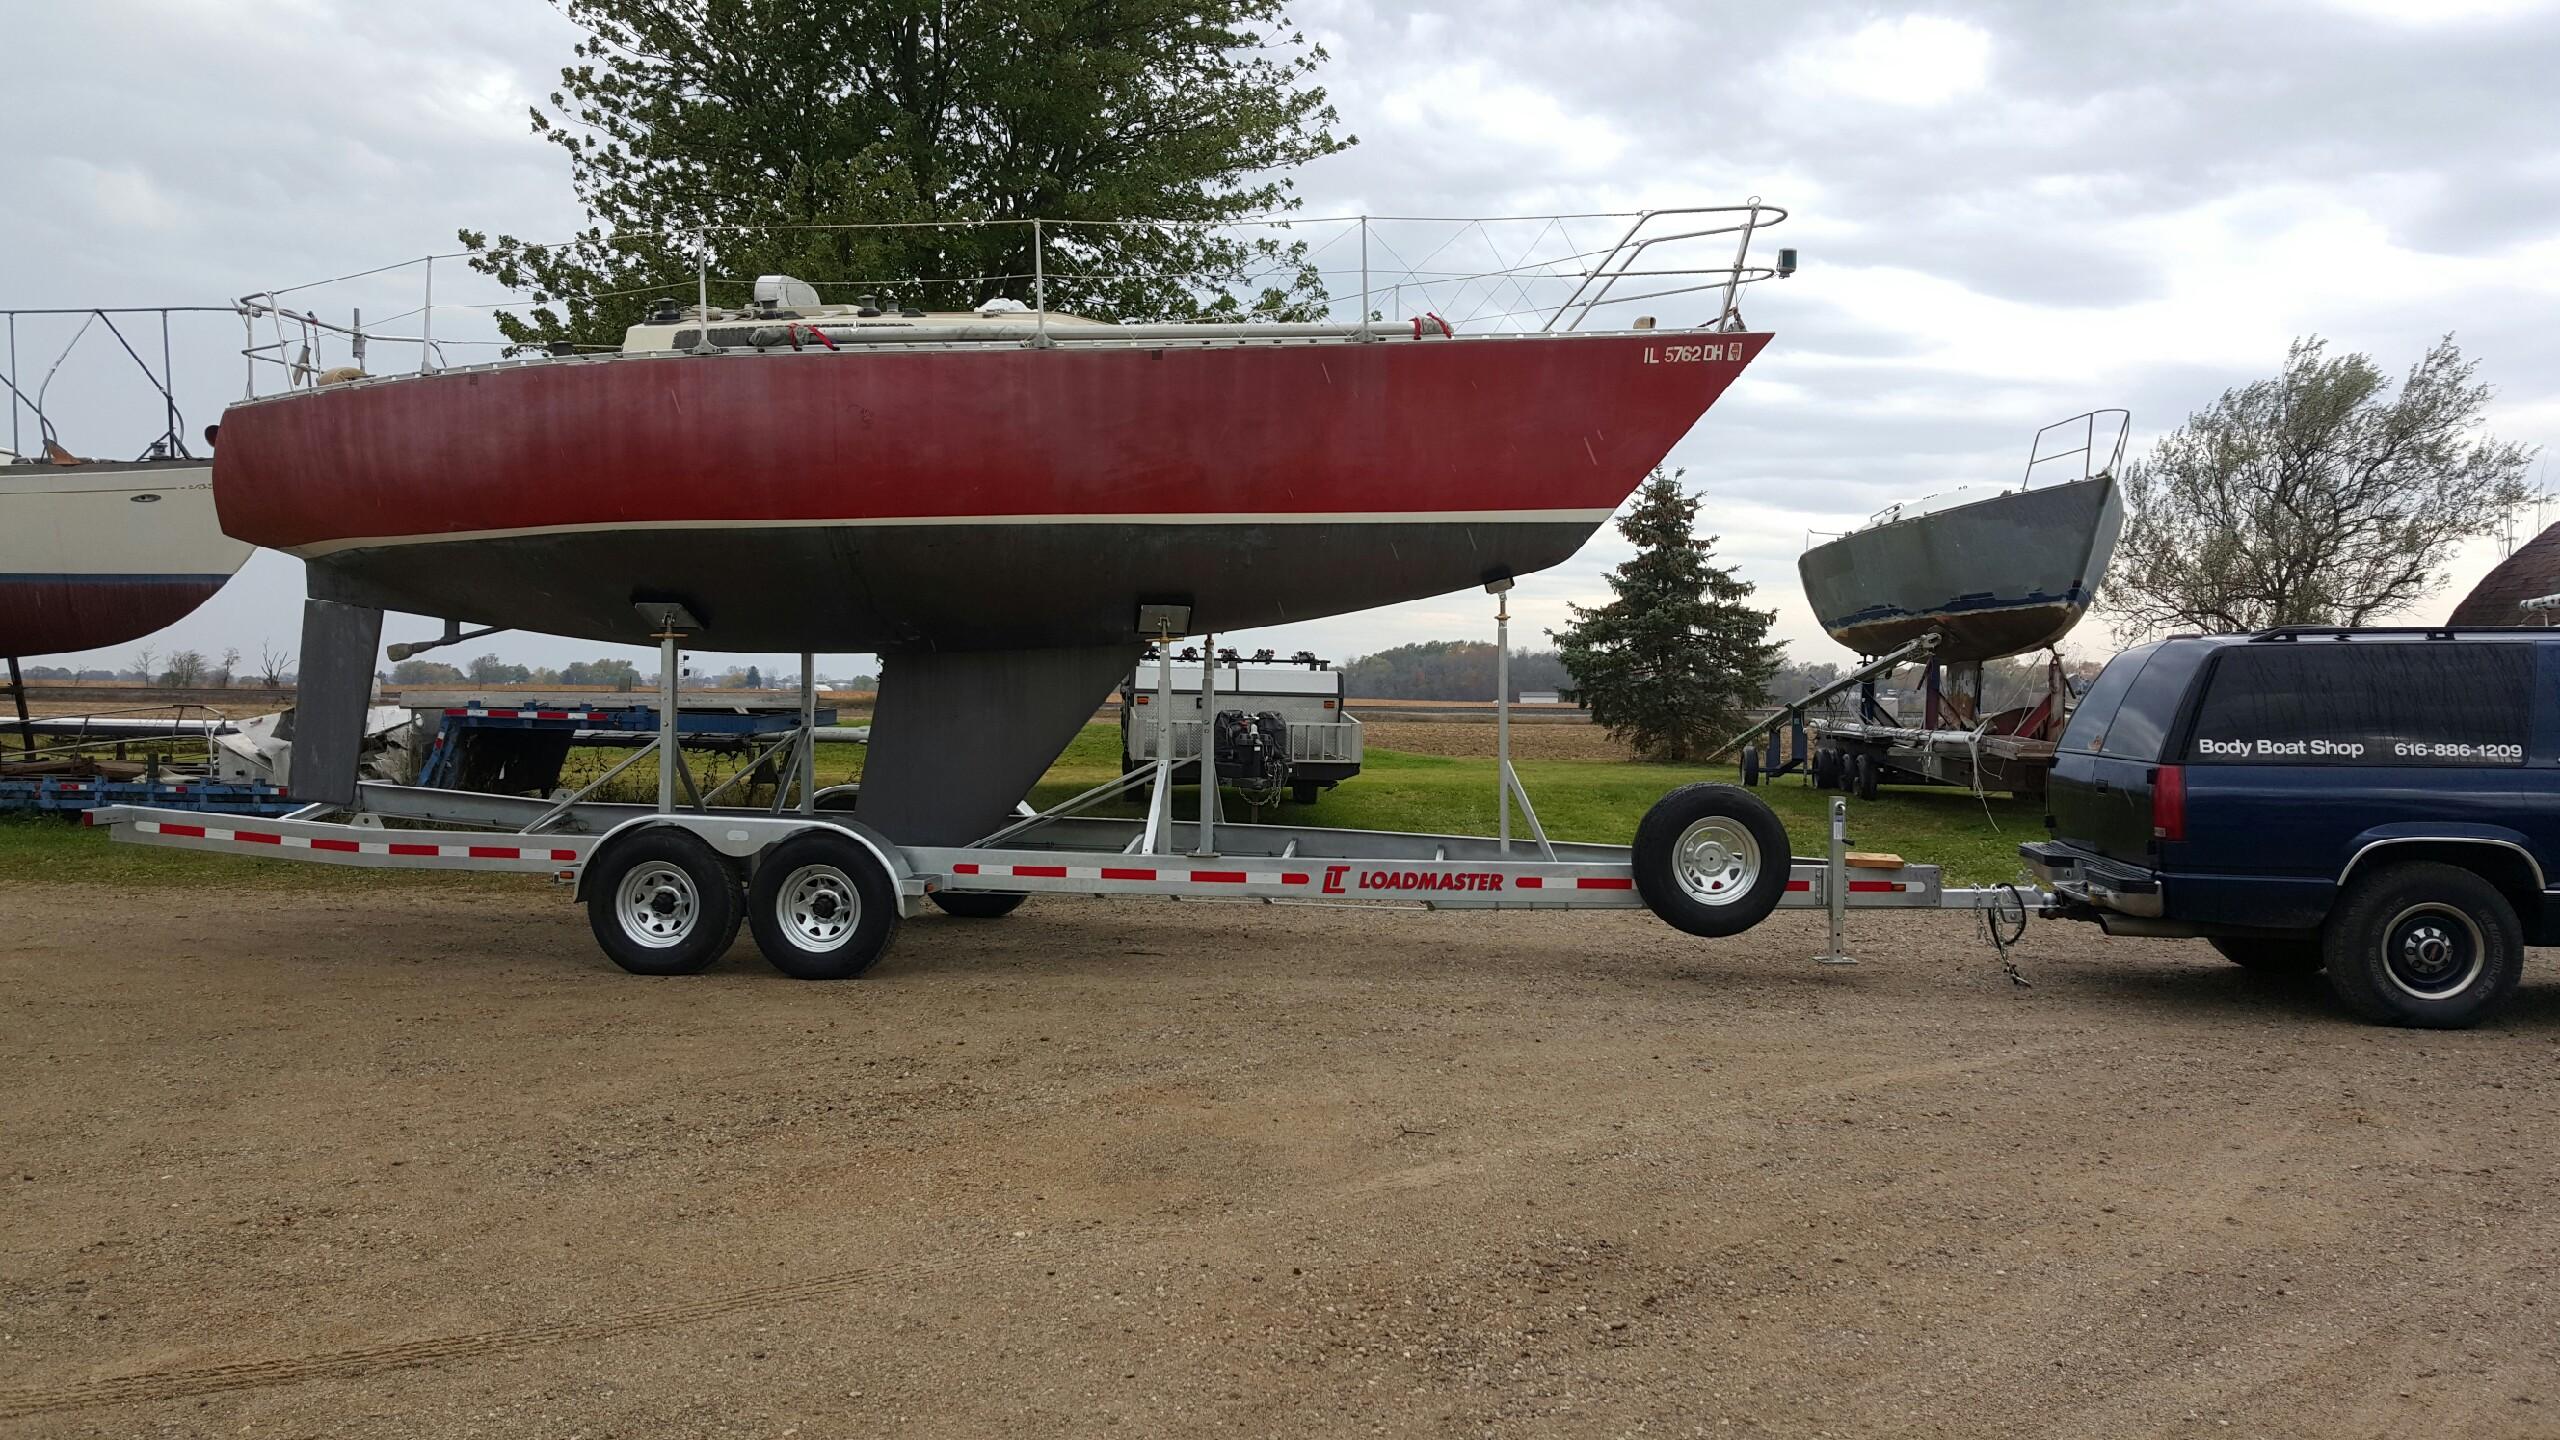 30' sailboat trailer for sale